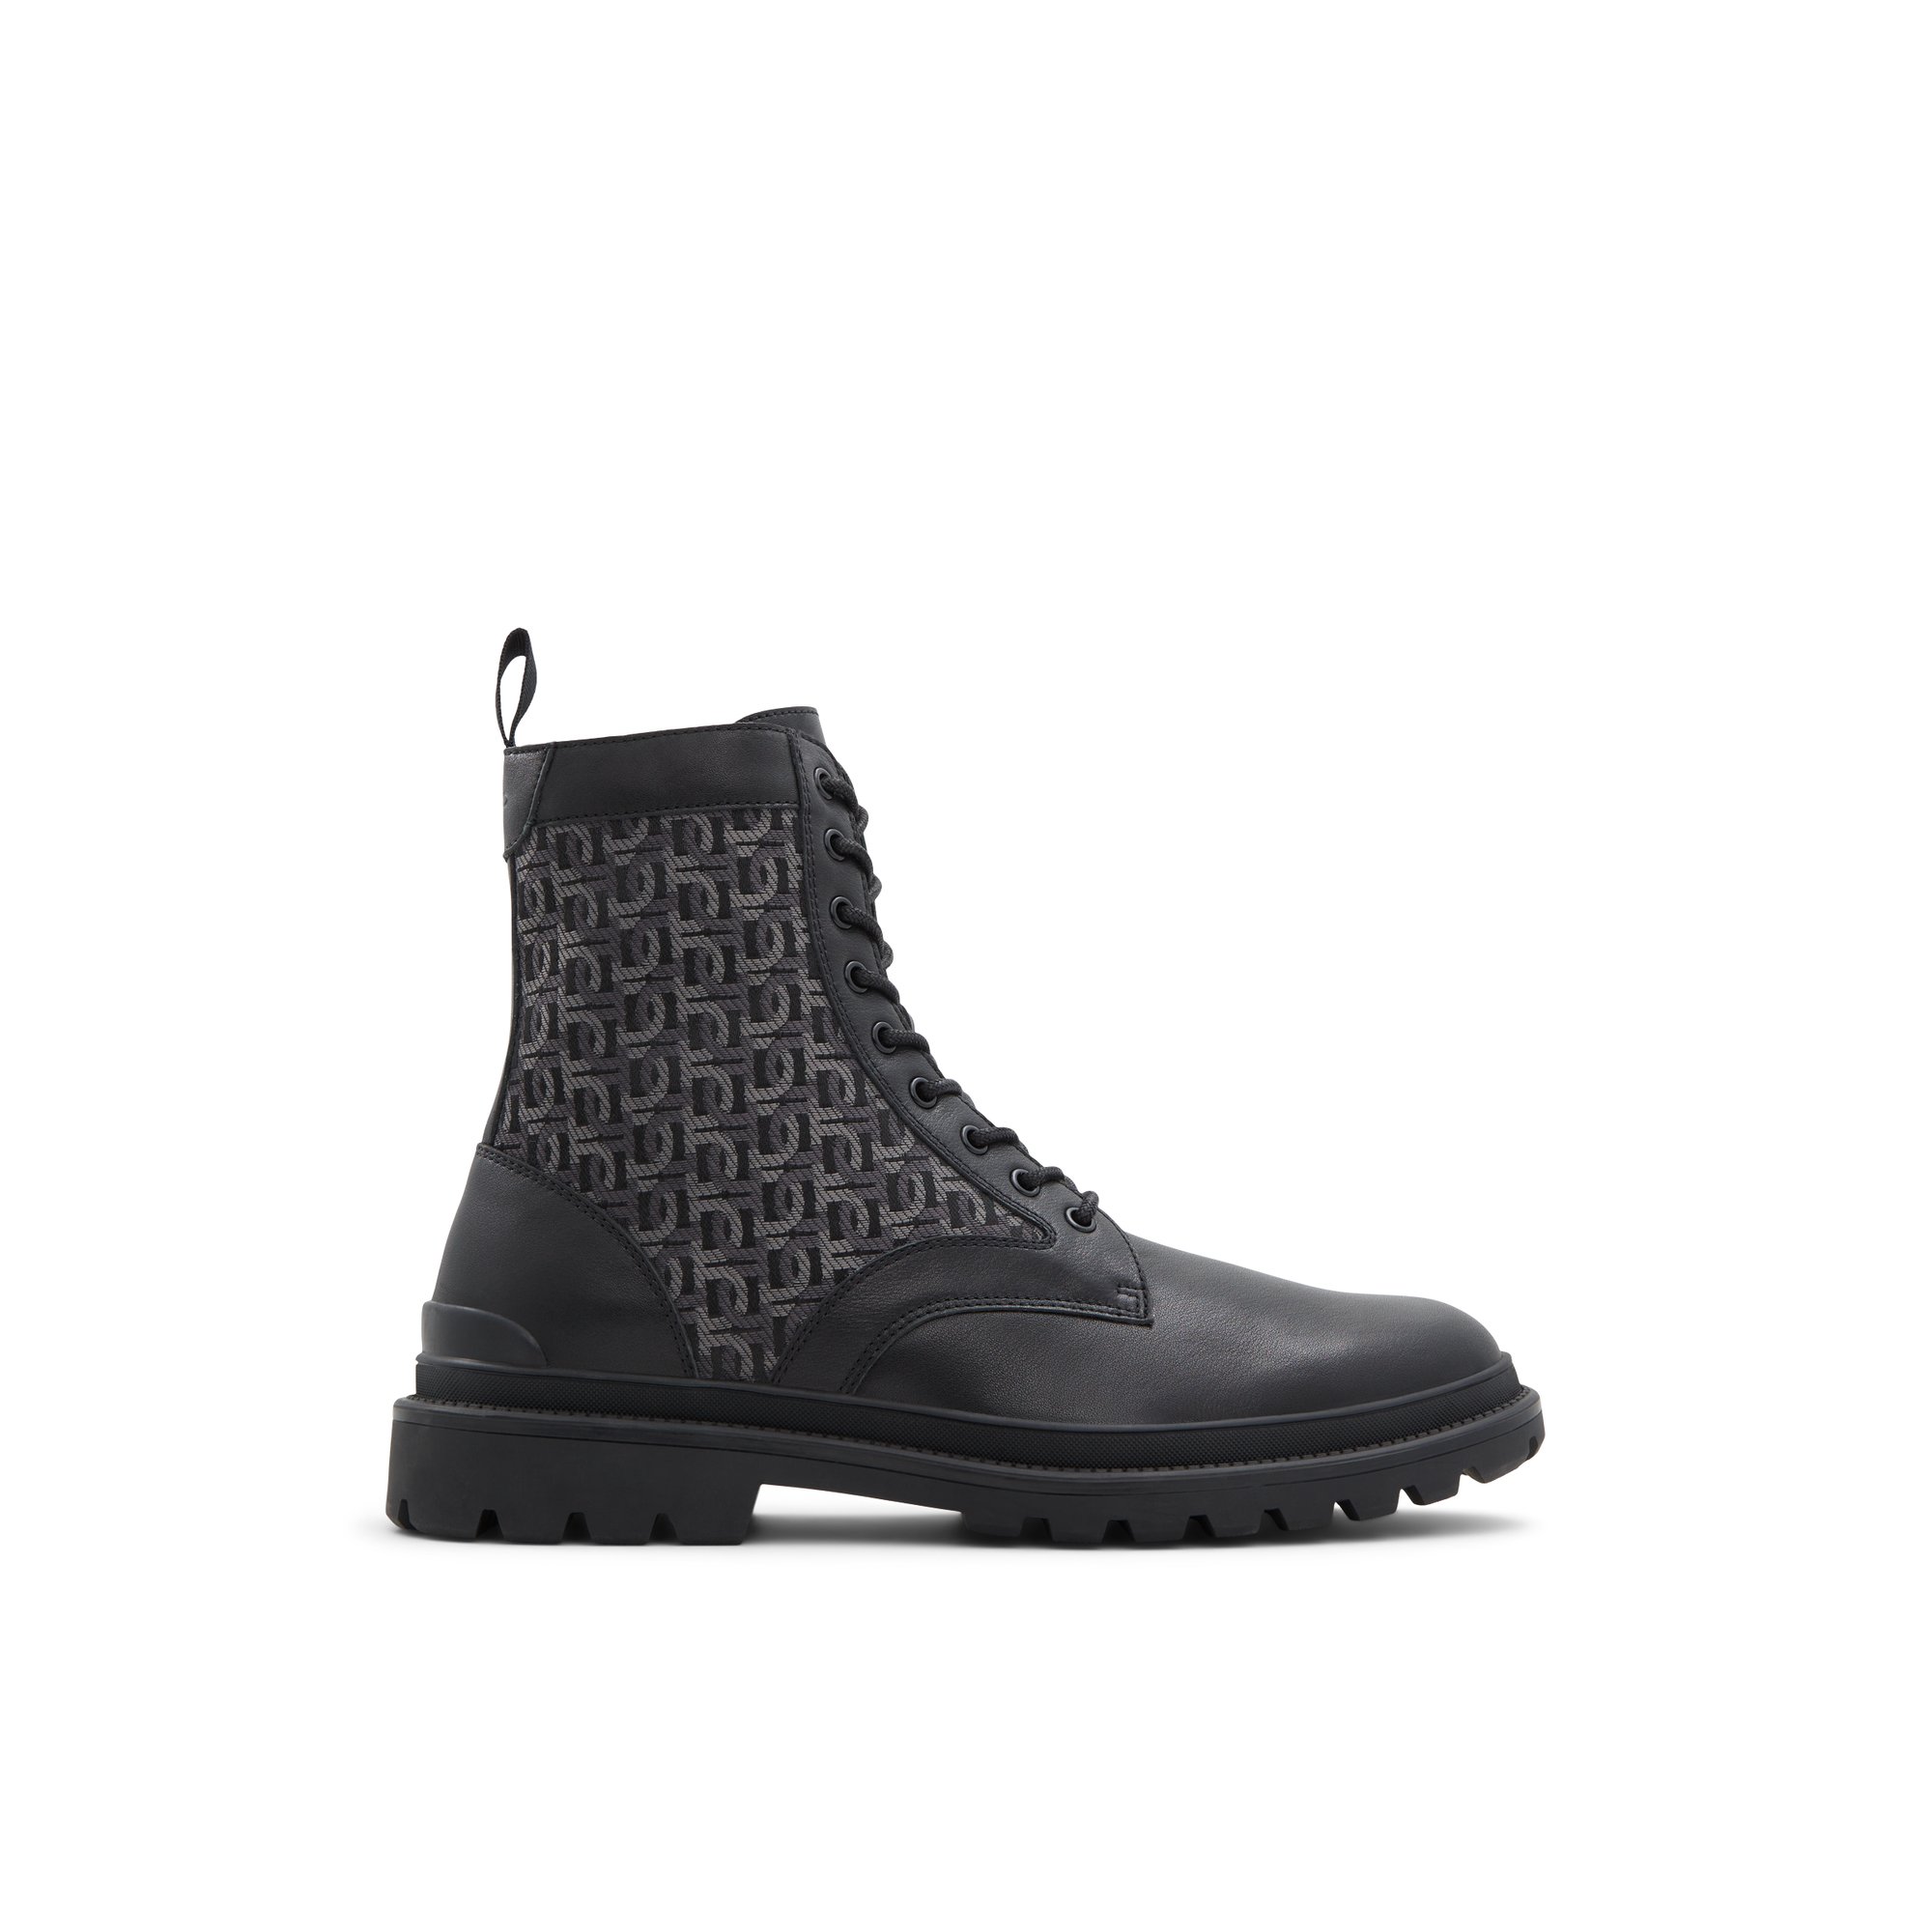 ALDO Muuler - Men's Lace-up Boot - Black